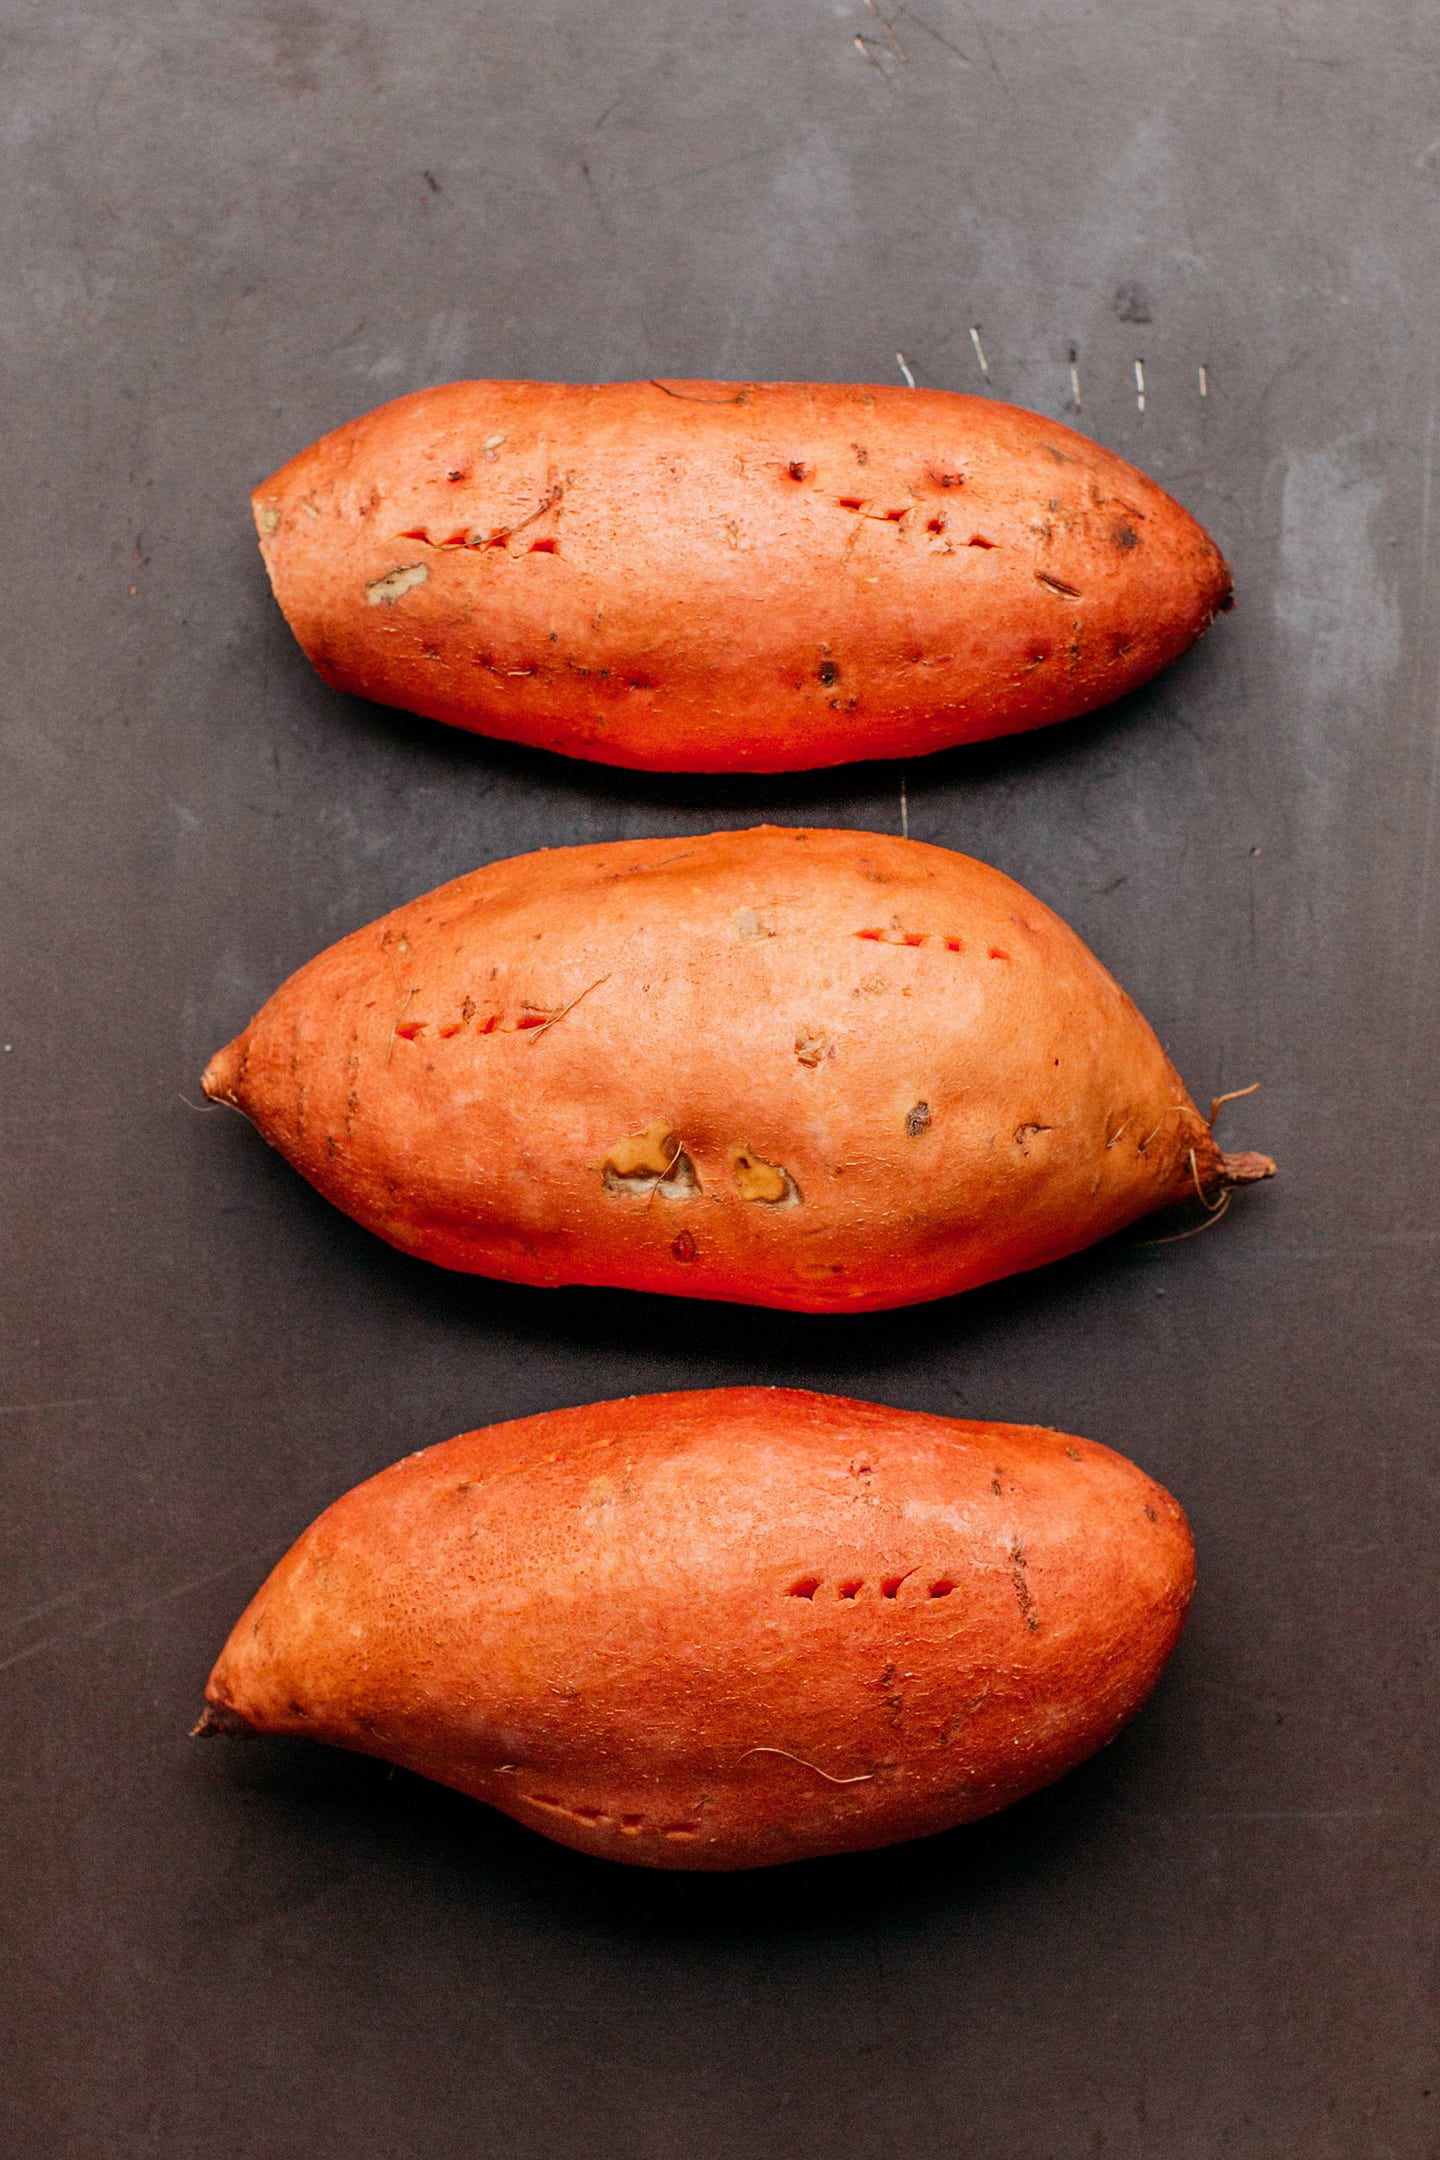 Uncooked sweet potatoes on a baking sheet.